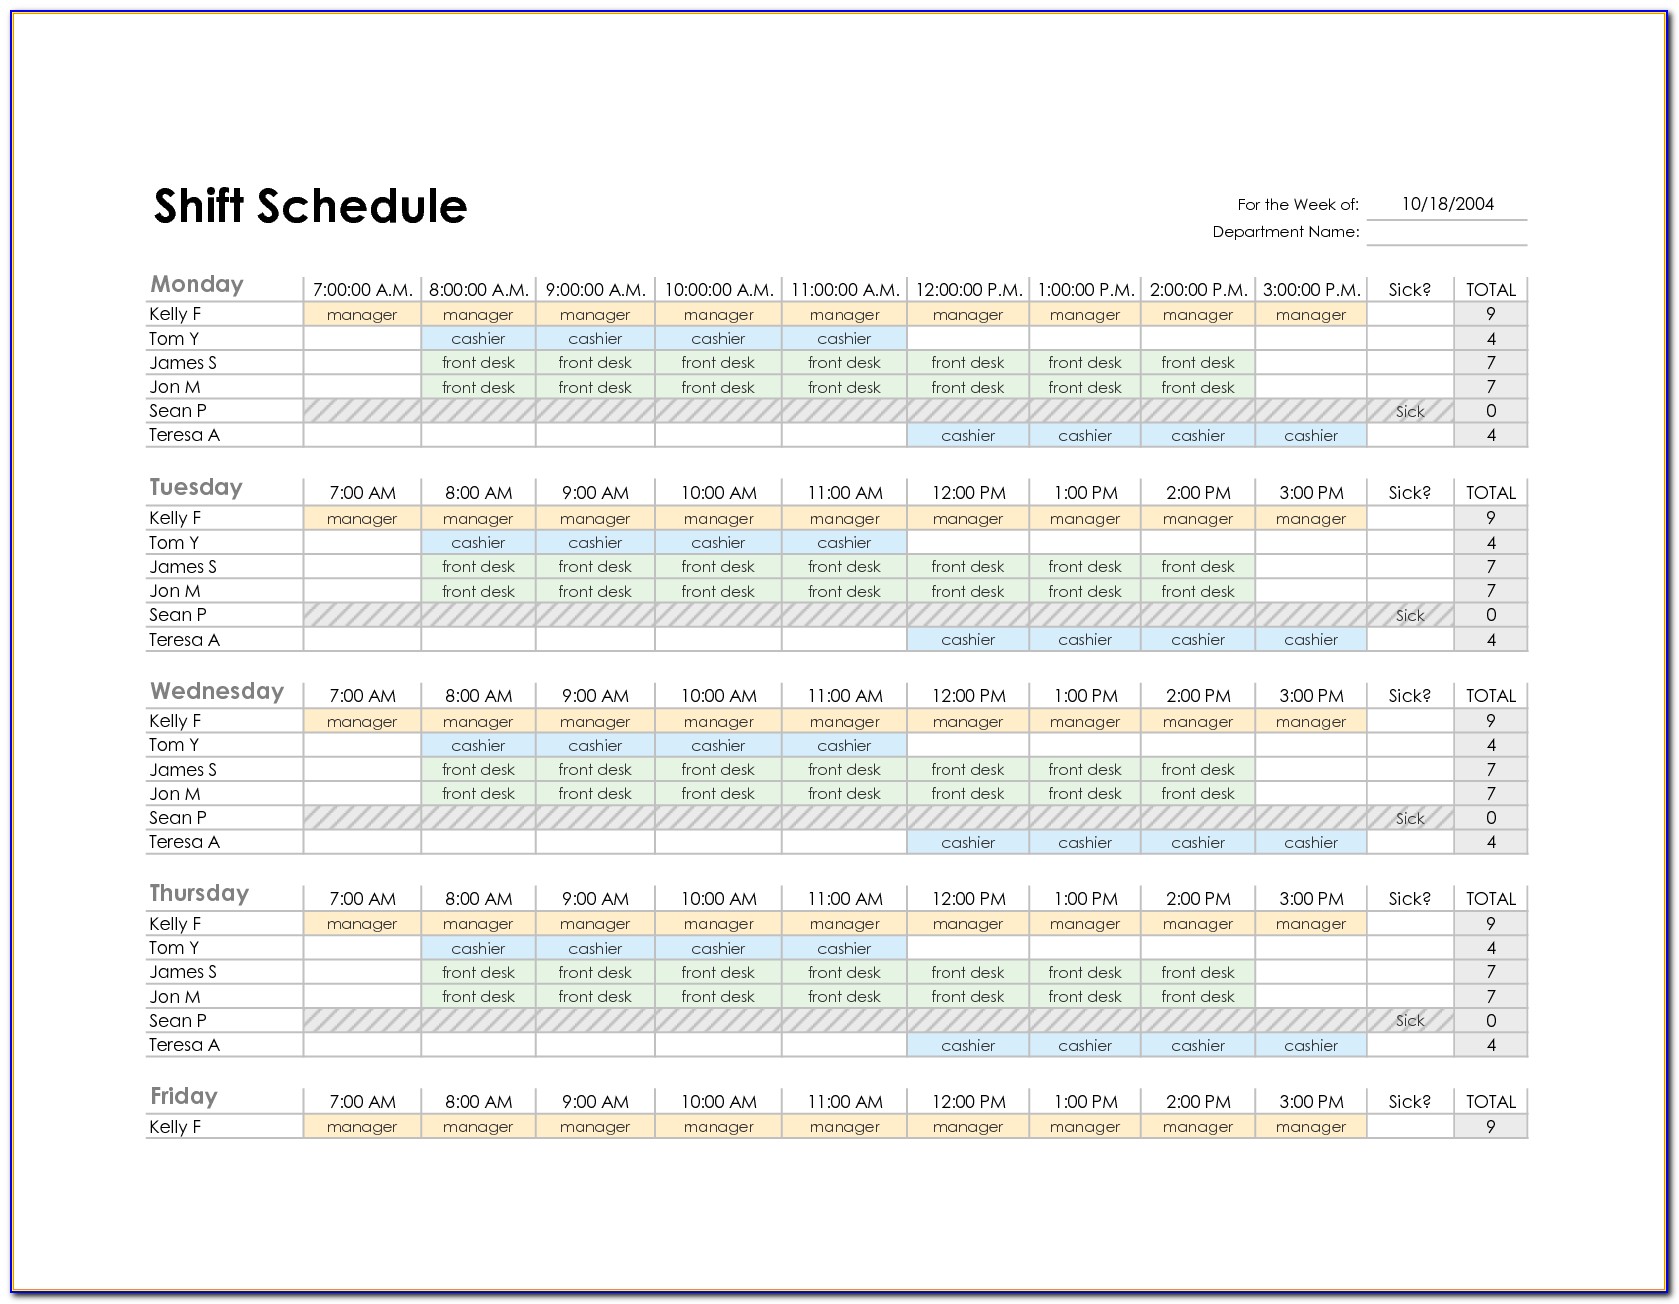 Monthly Employee Work Schedule Template